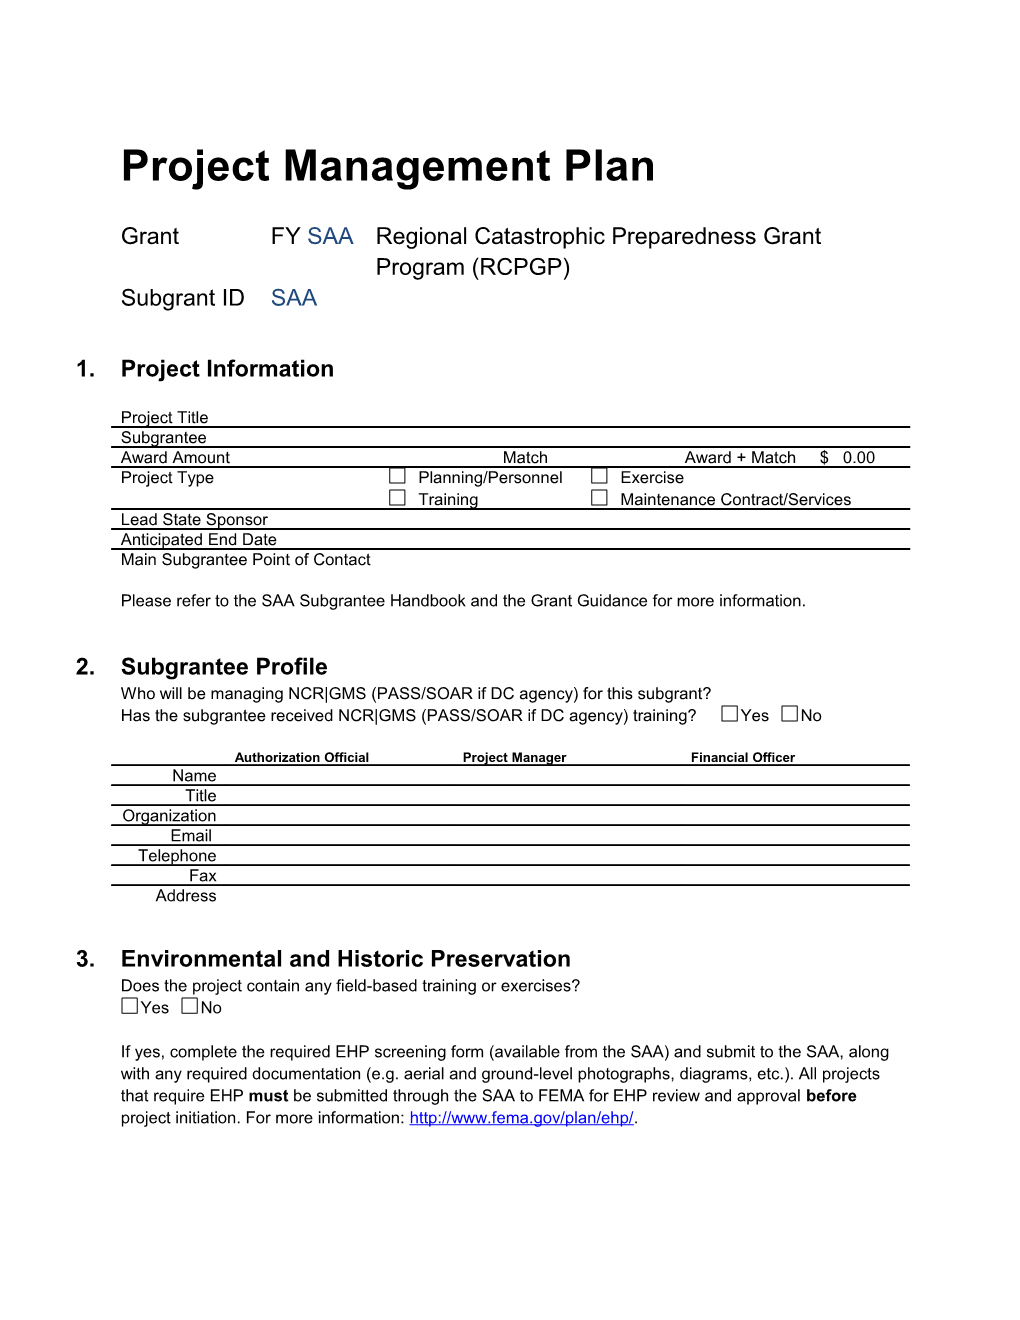 Project Management Plan RCPGP